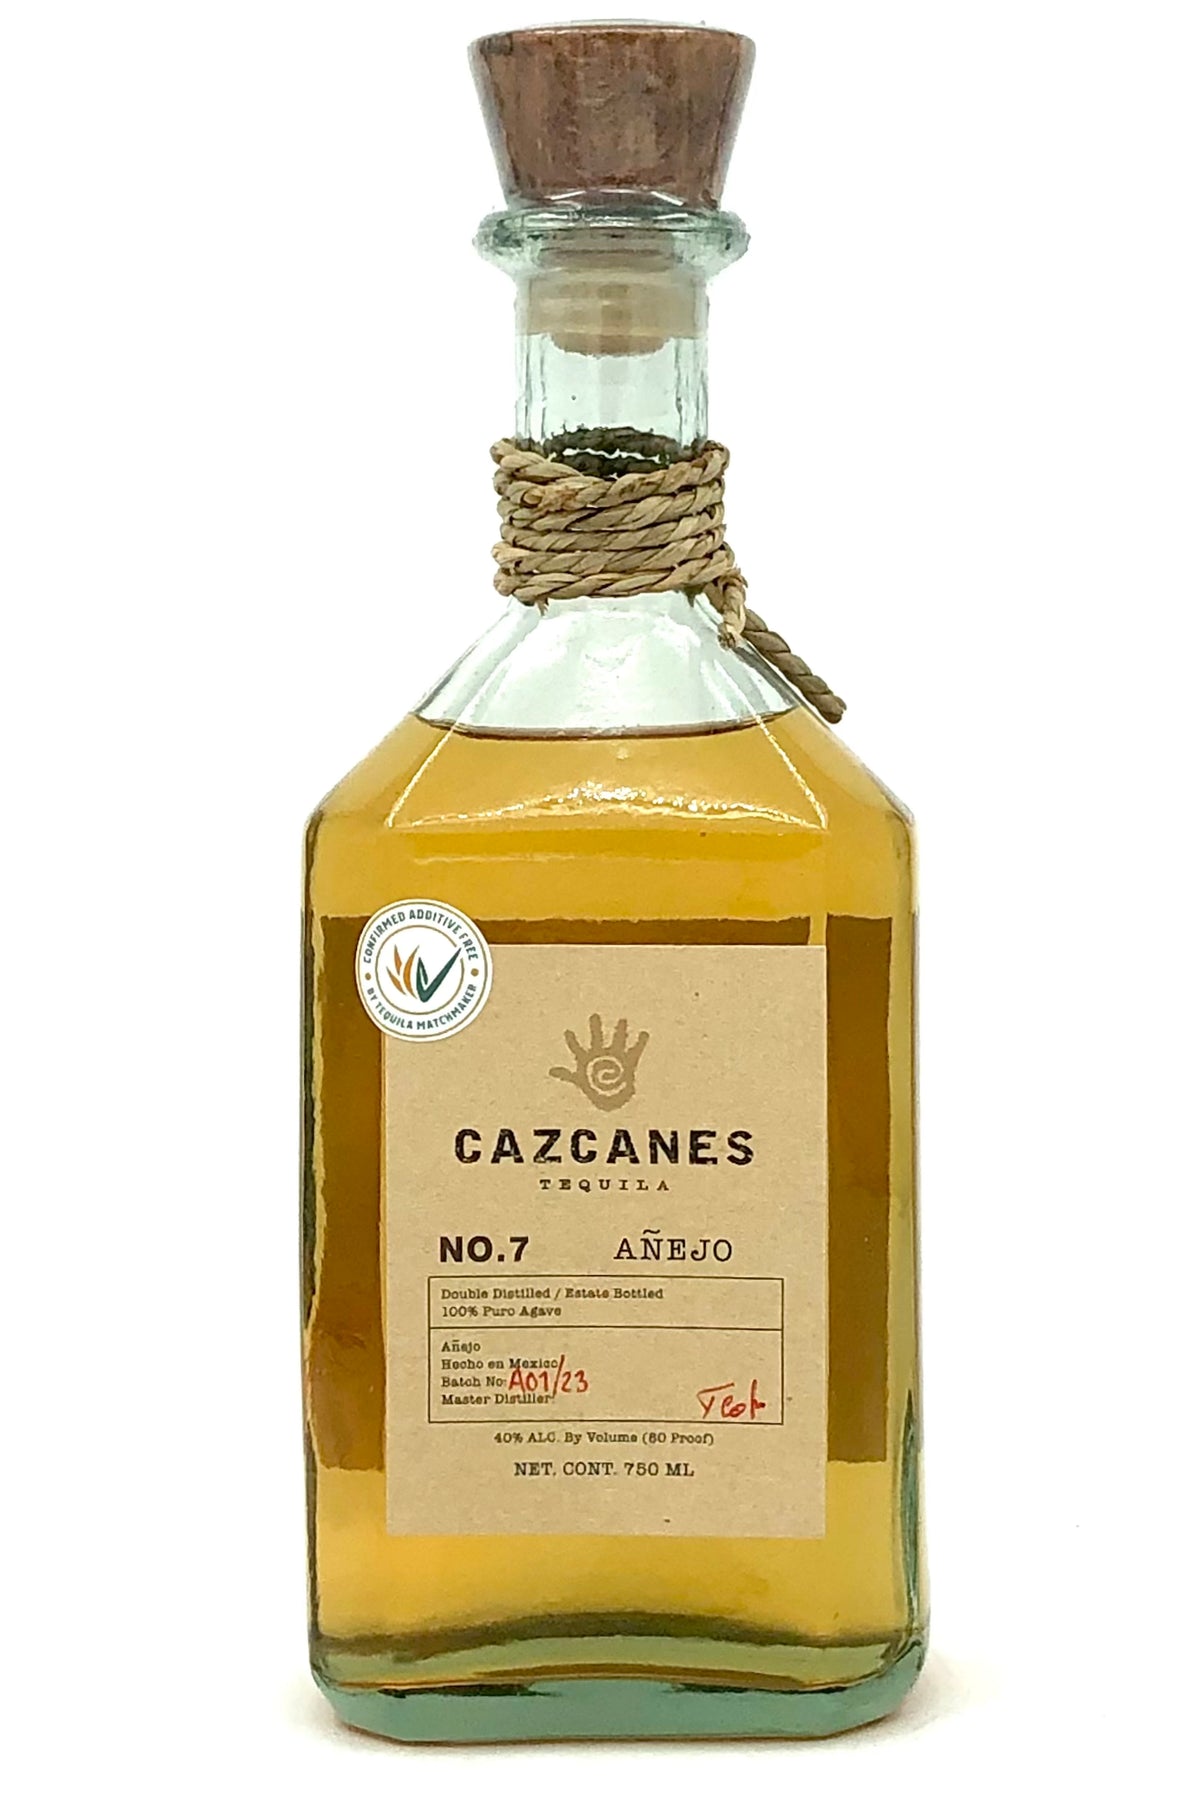 Cazcanes Tequila Anejo No. 7